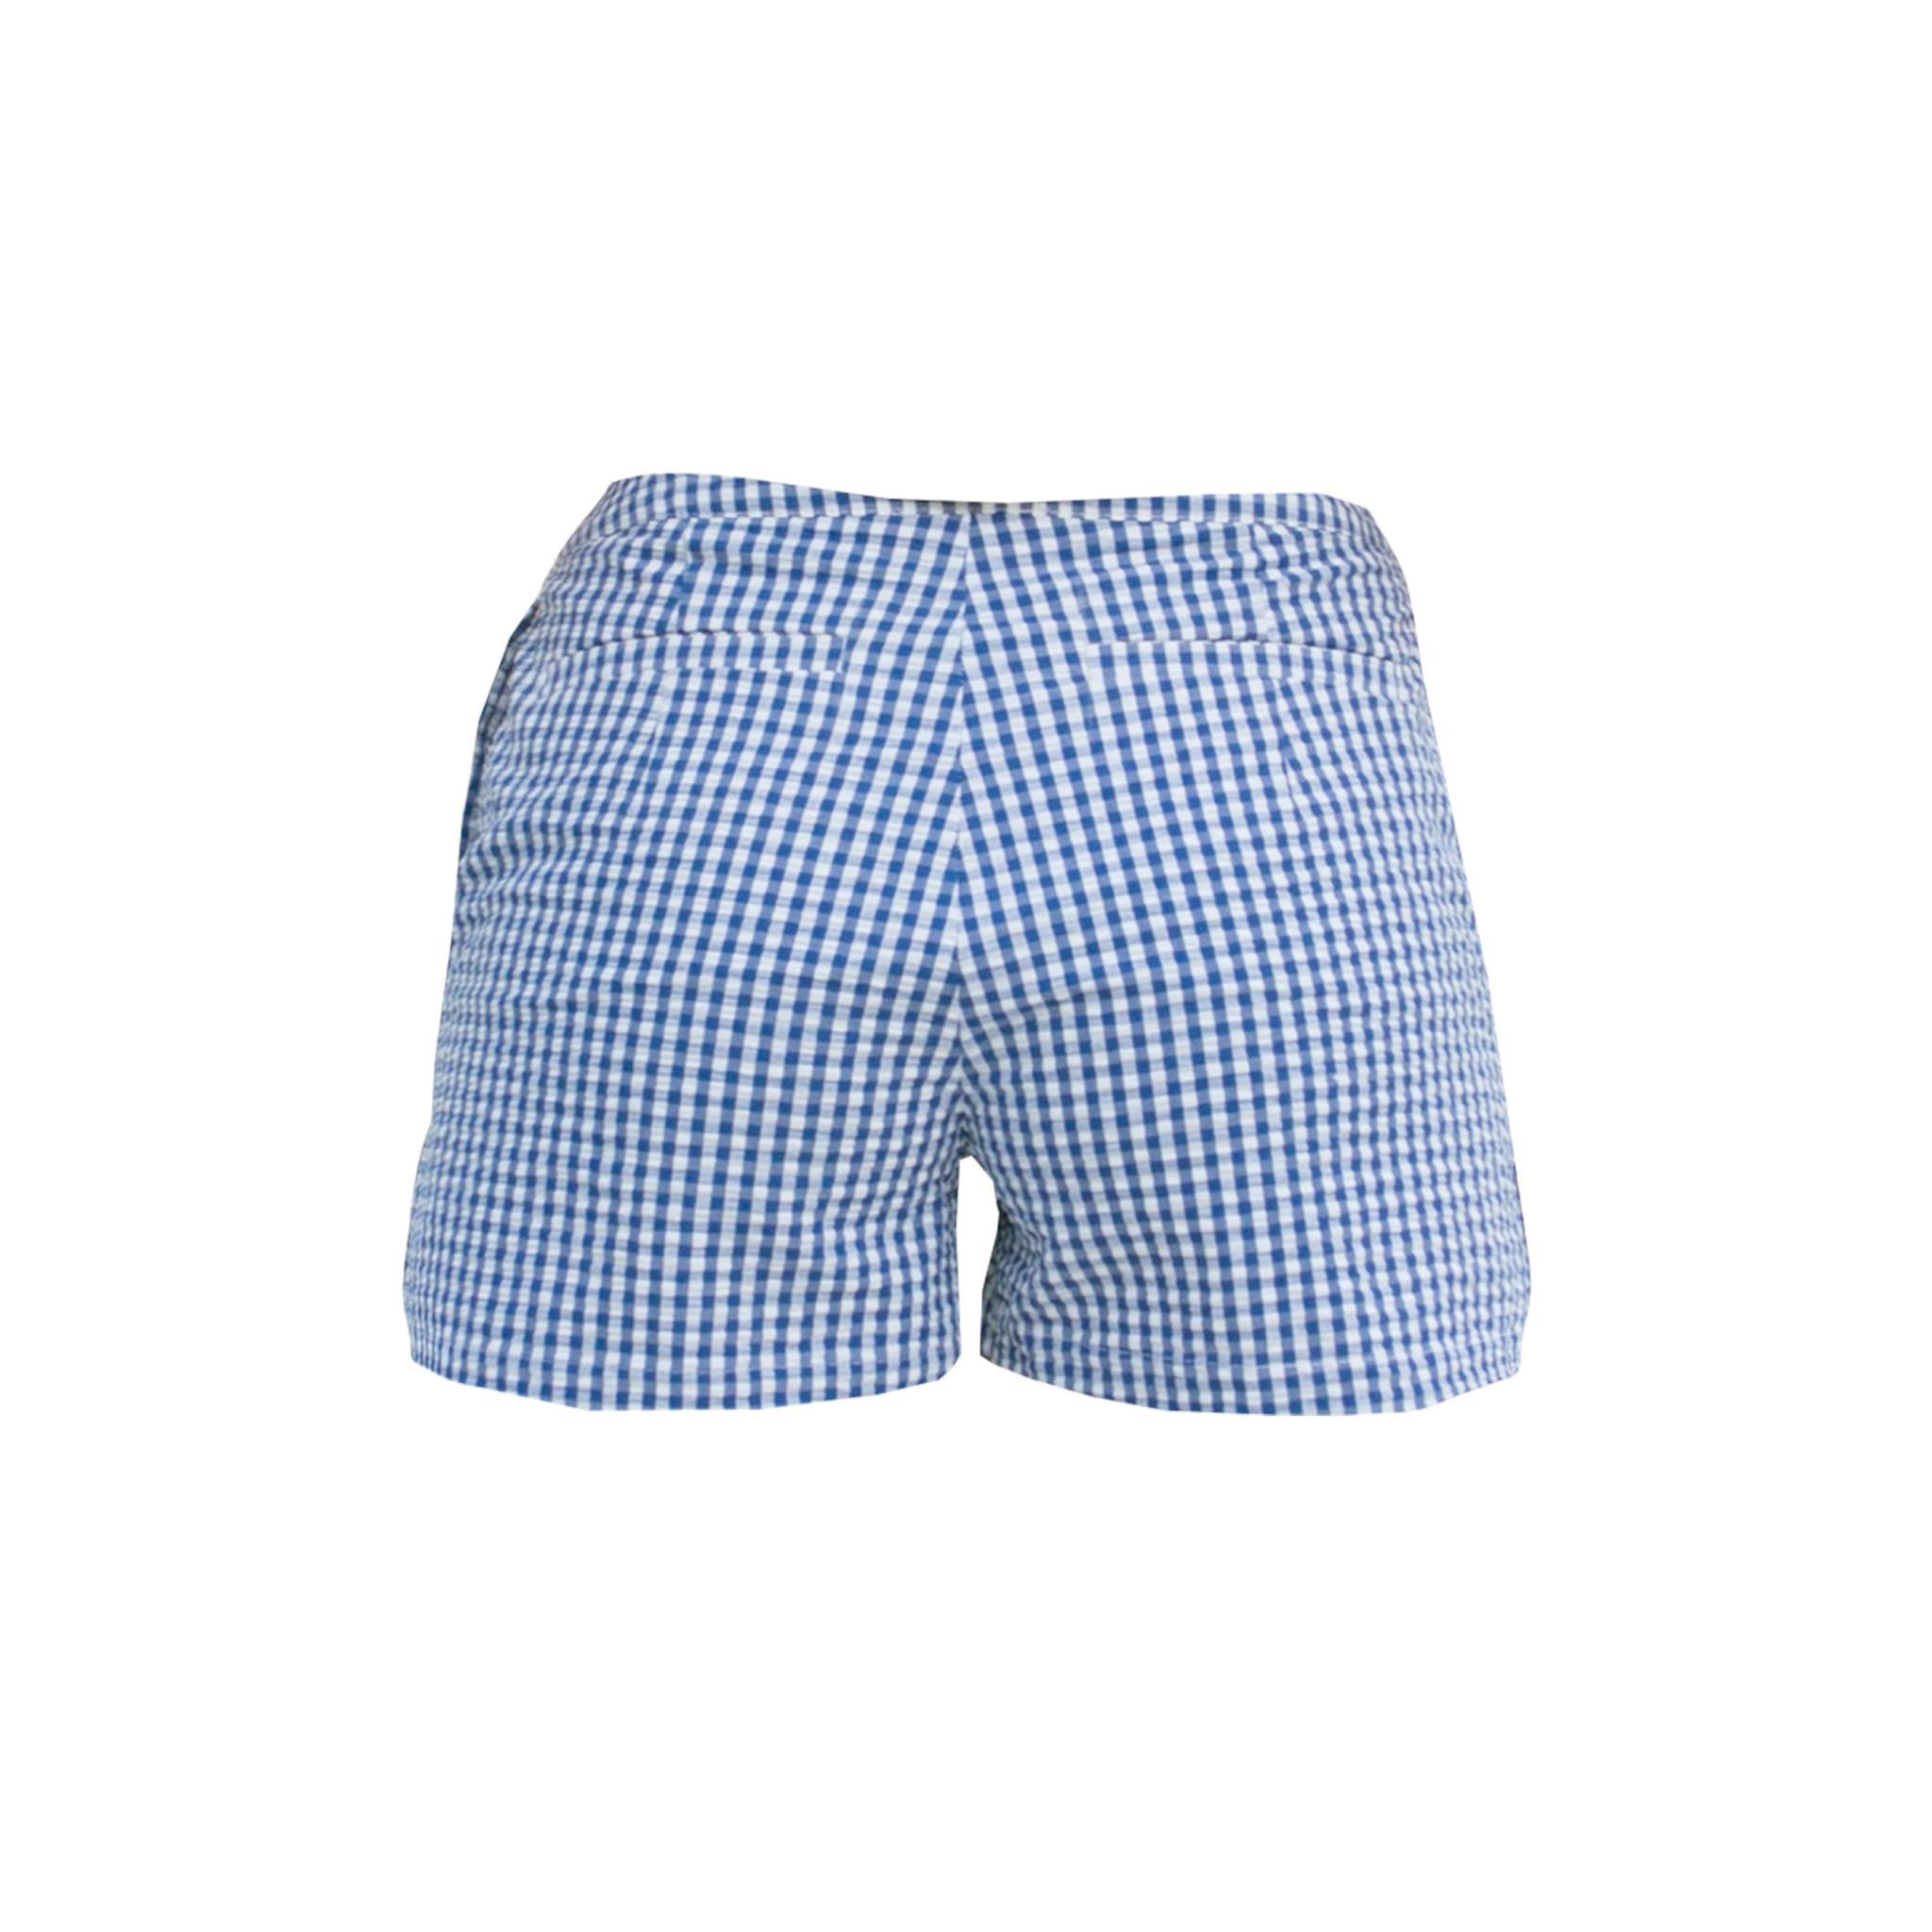 SOLYMAR Blue & White Overlap Shorts